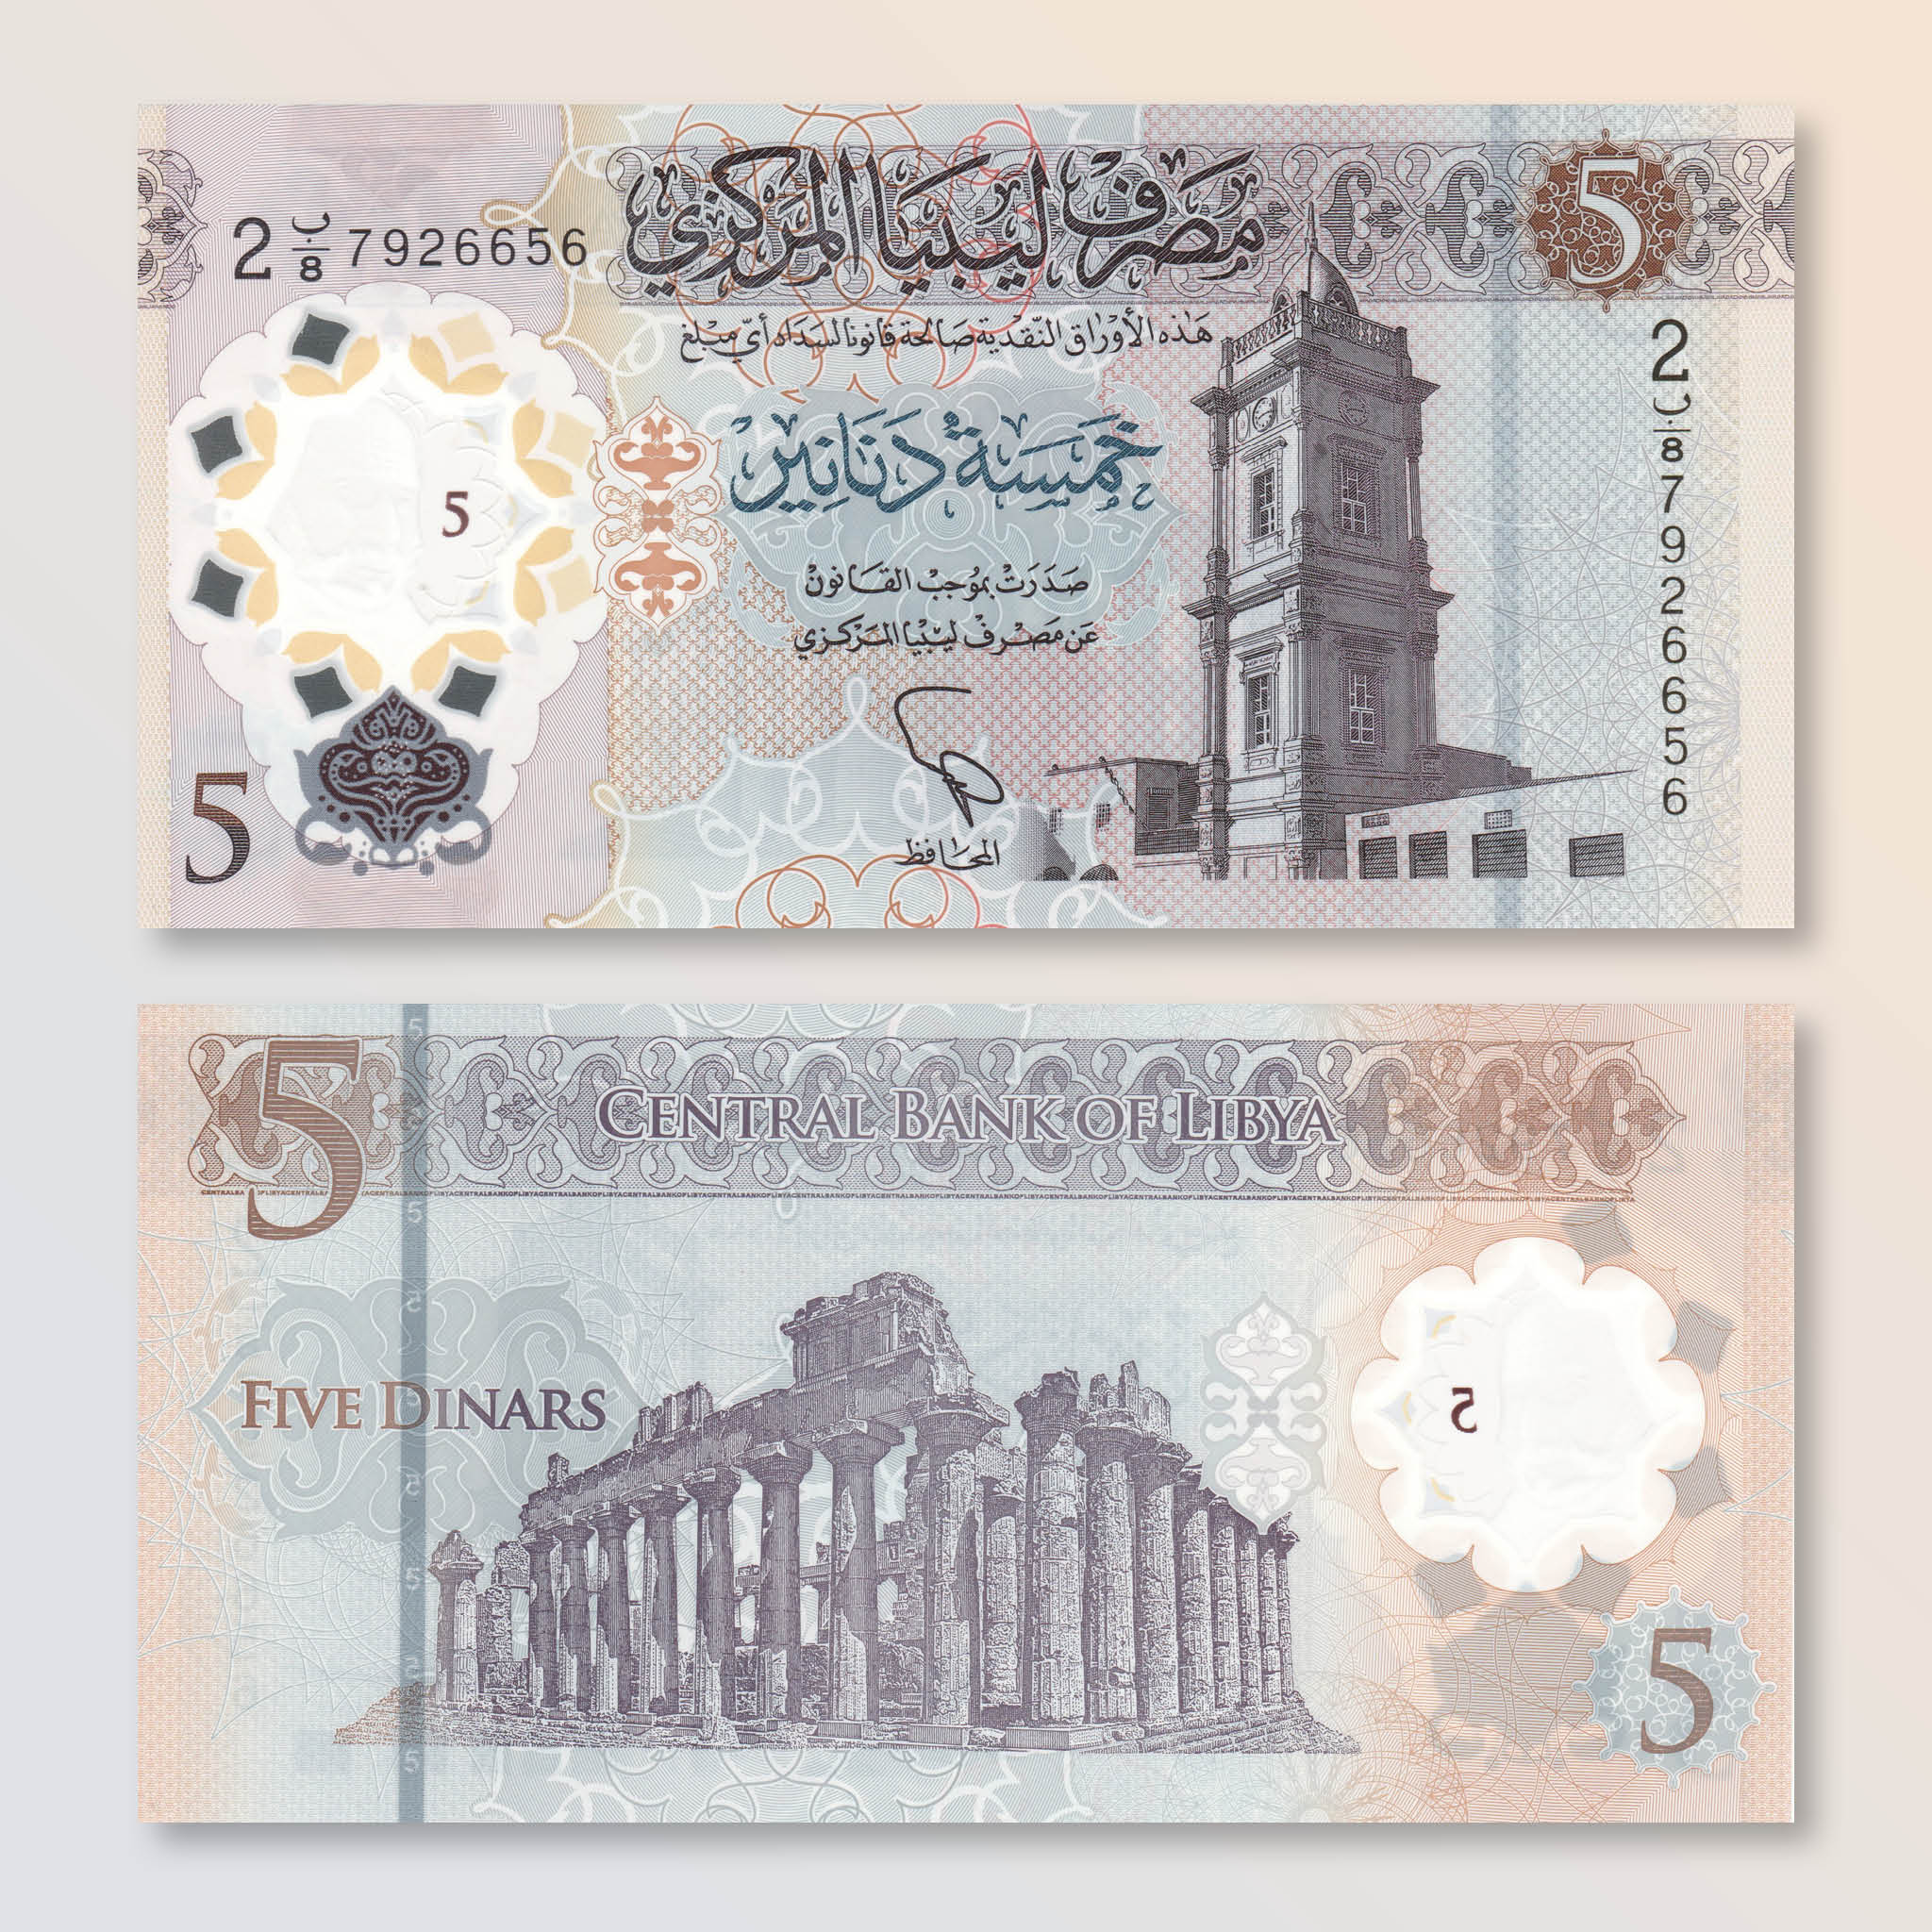 Libya 5 Dinars, 2021, B551a, UNC - Robert's World Money - World Banknotes